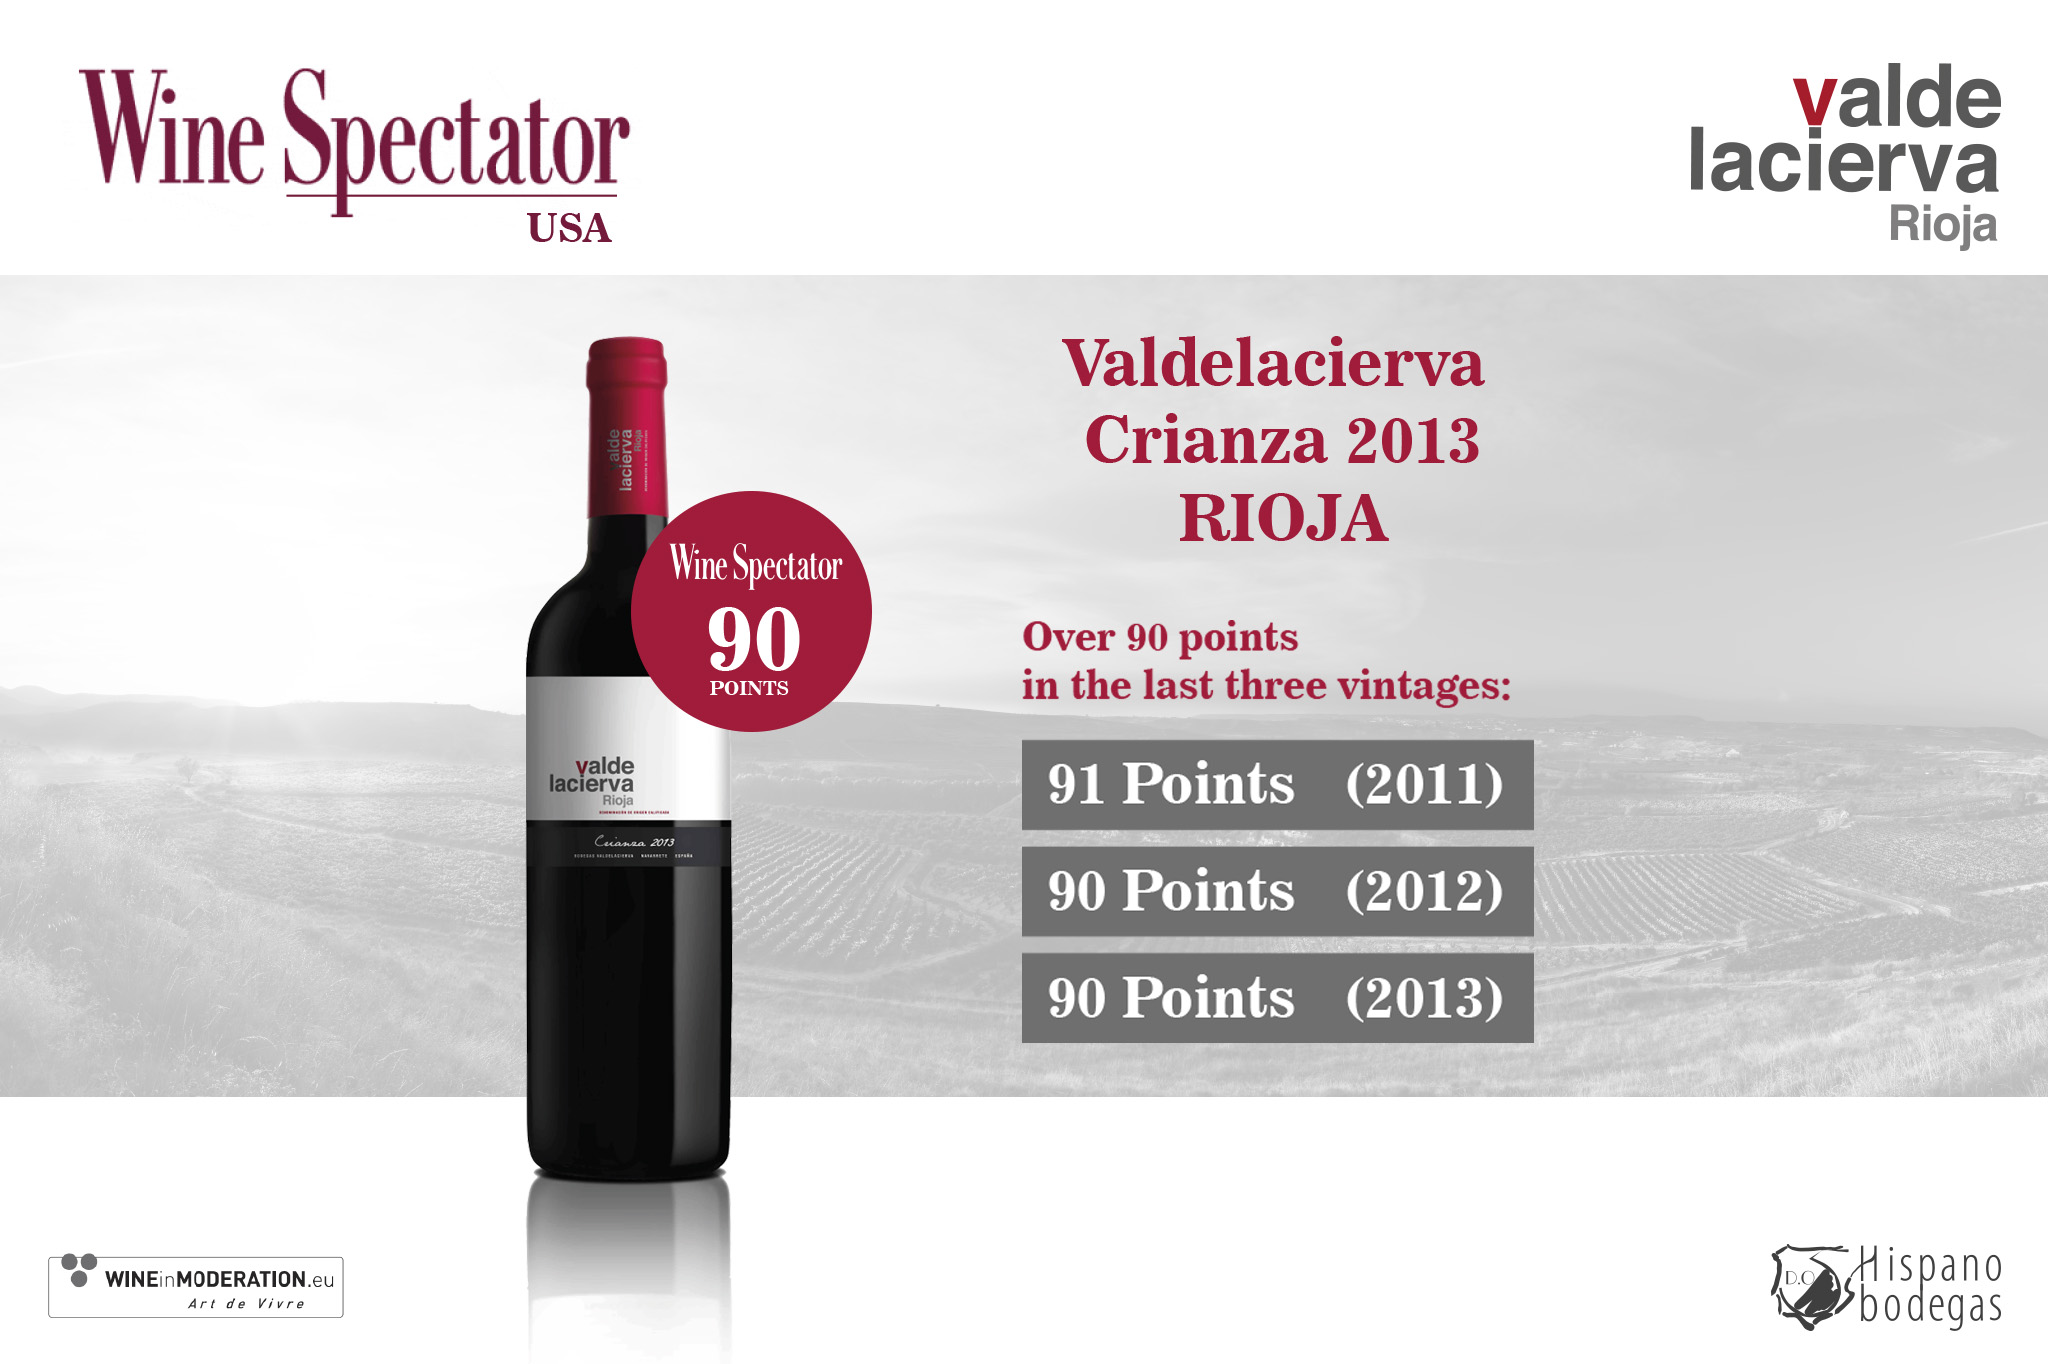 Valdelacierva Crianza 2013 archieves a 90 points in Wine Spectator